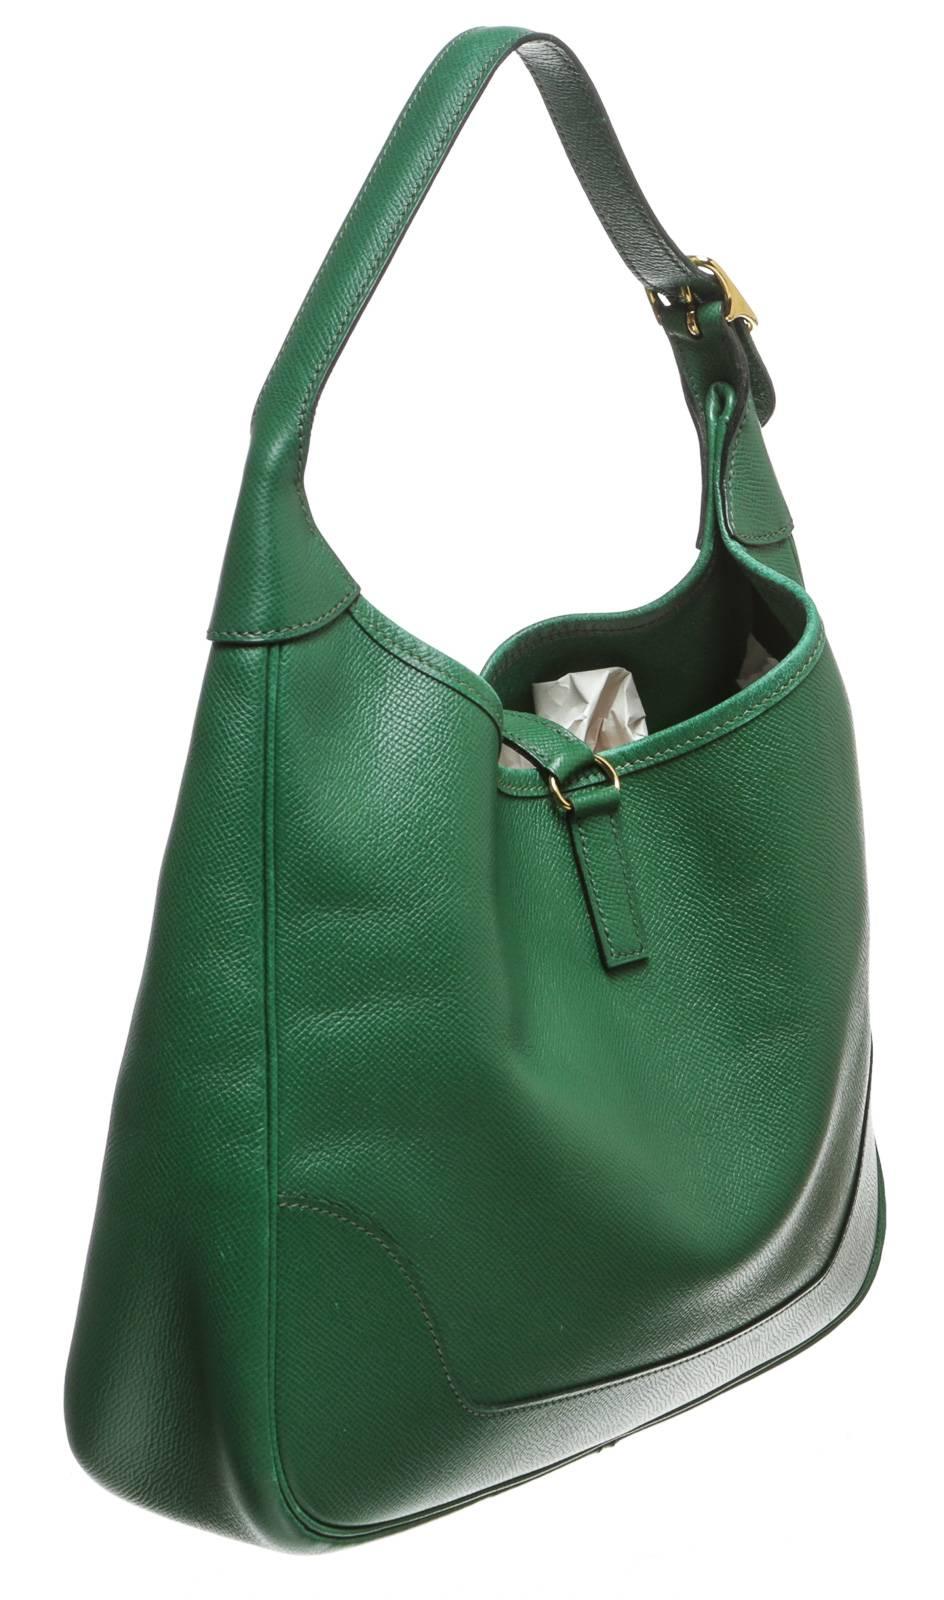 Hermes Vert Bengale Leather Trim Shoulder Handbag In Good Condition For Sale In Corona Del Mar, CA